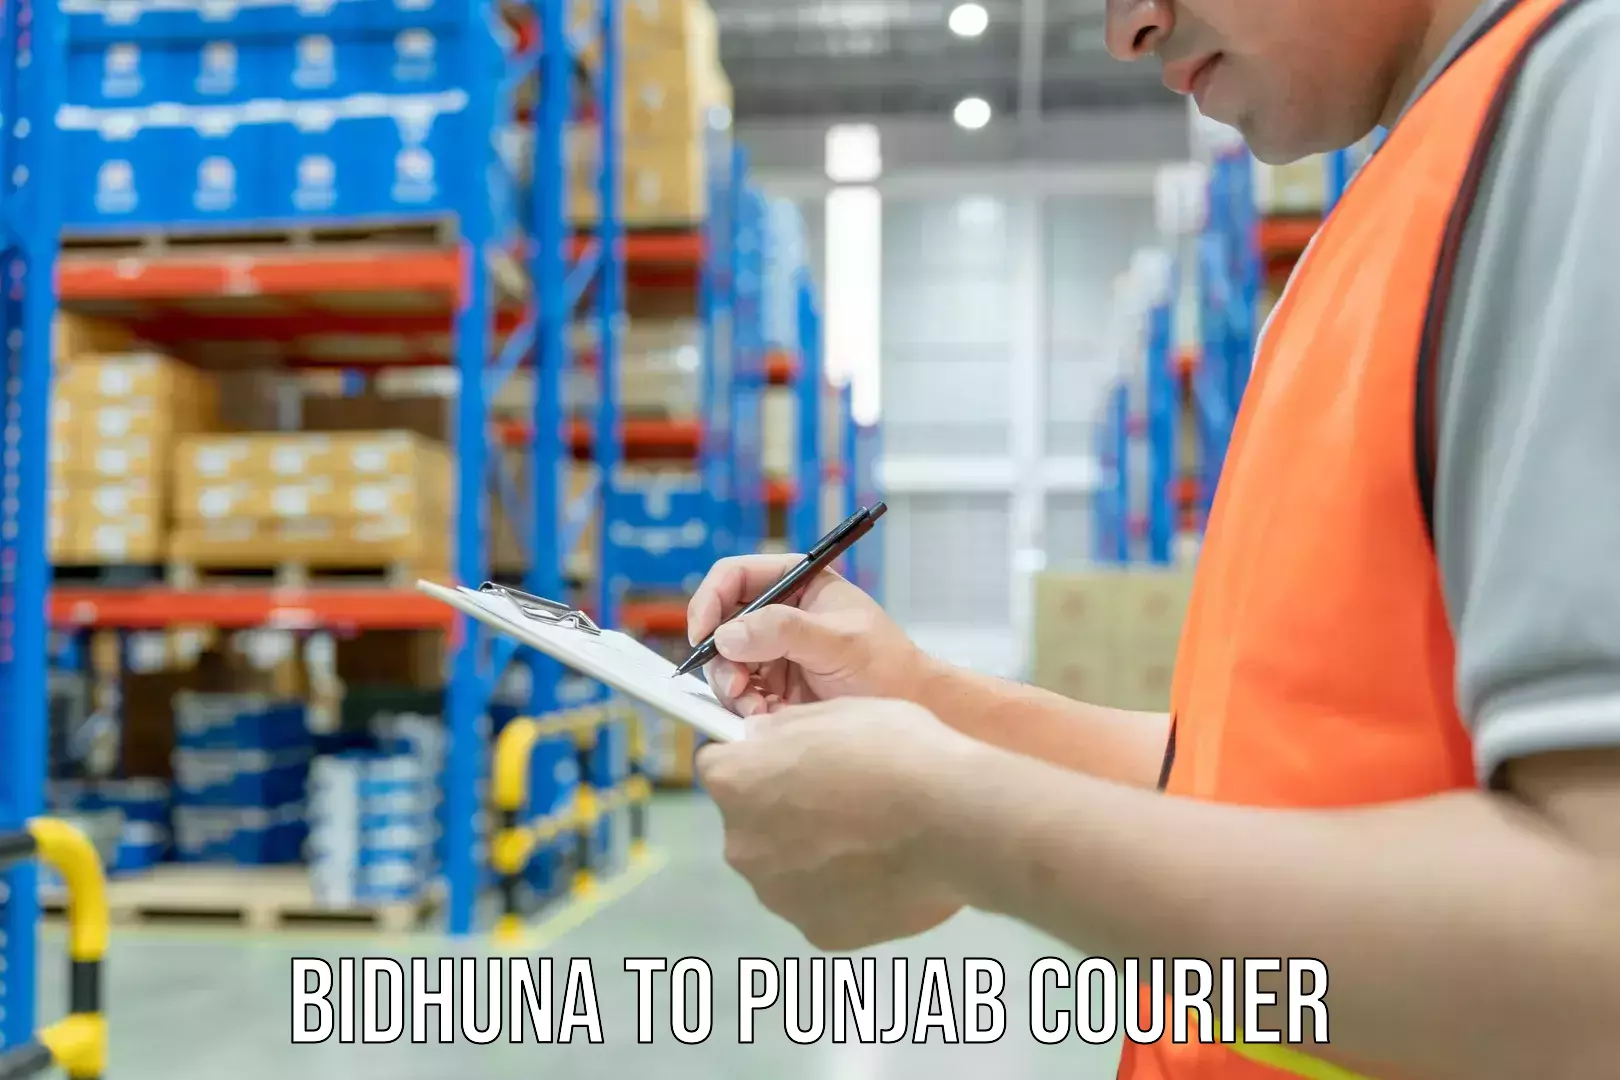 User-friendly courier app Bidhuna to Punjab